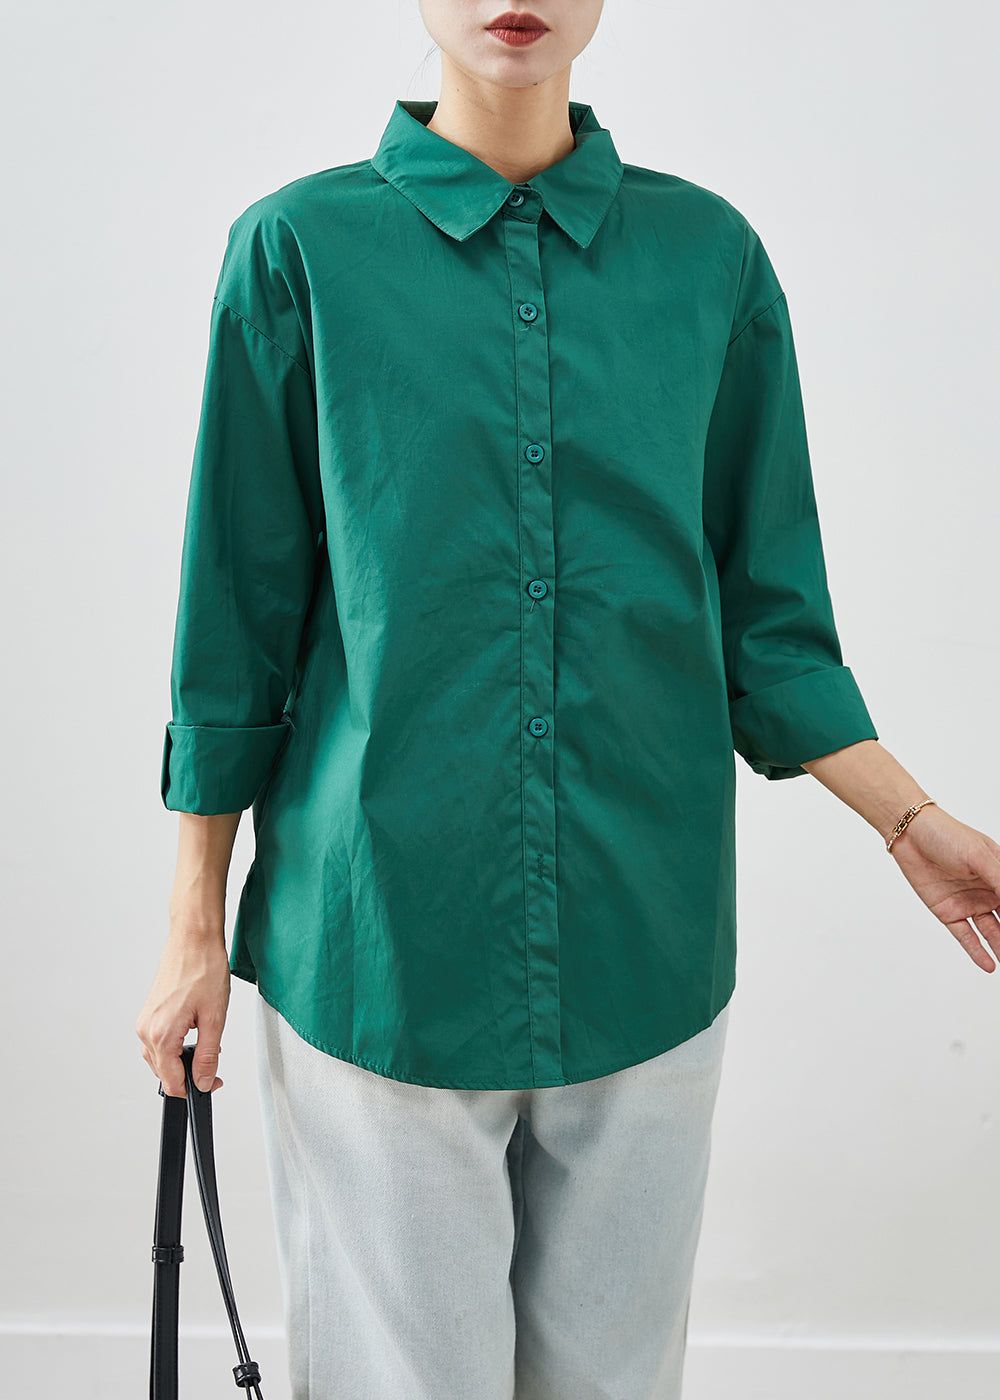 Green Silm Fitn Cotton Shirt Tops Peter Pan Collar Fall Ada Fashion